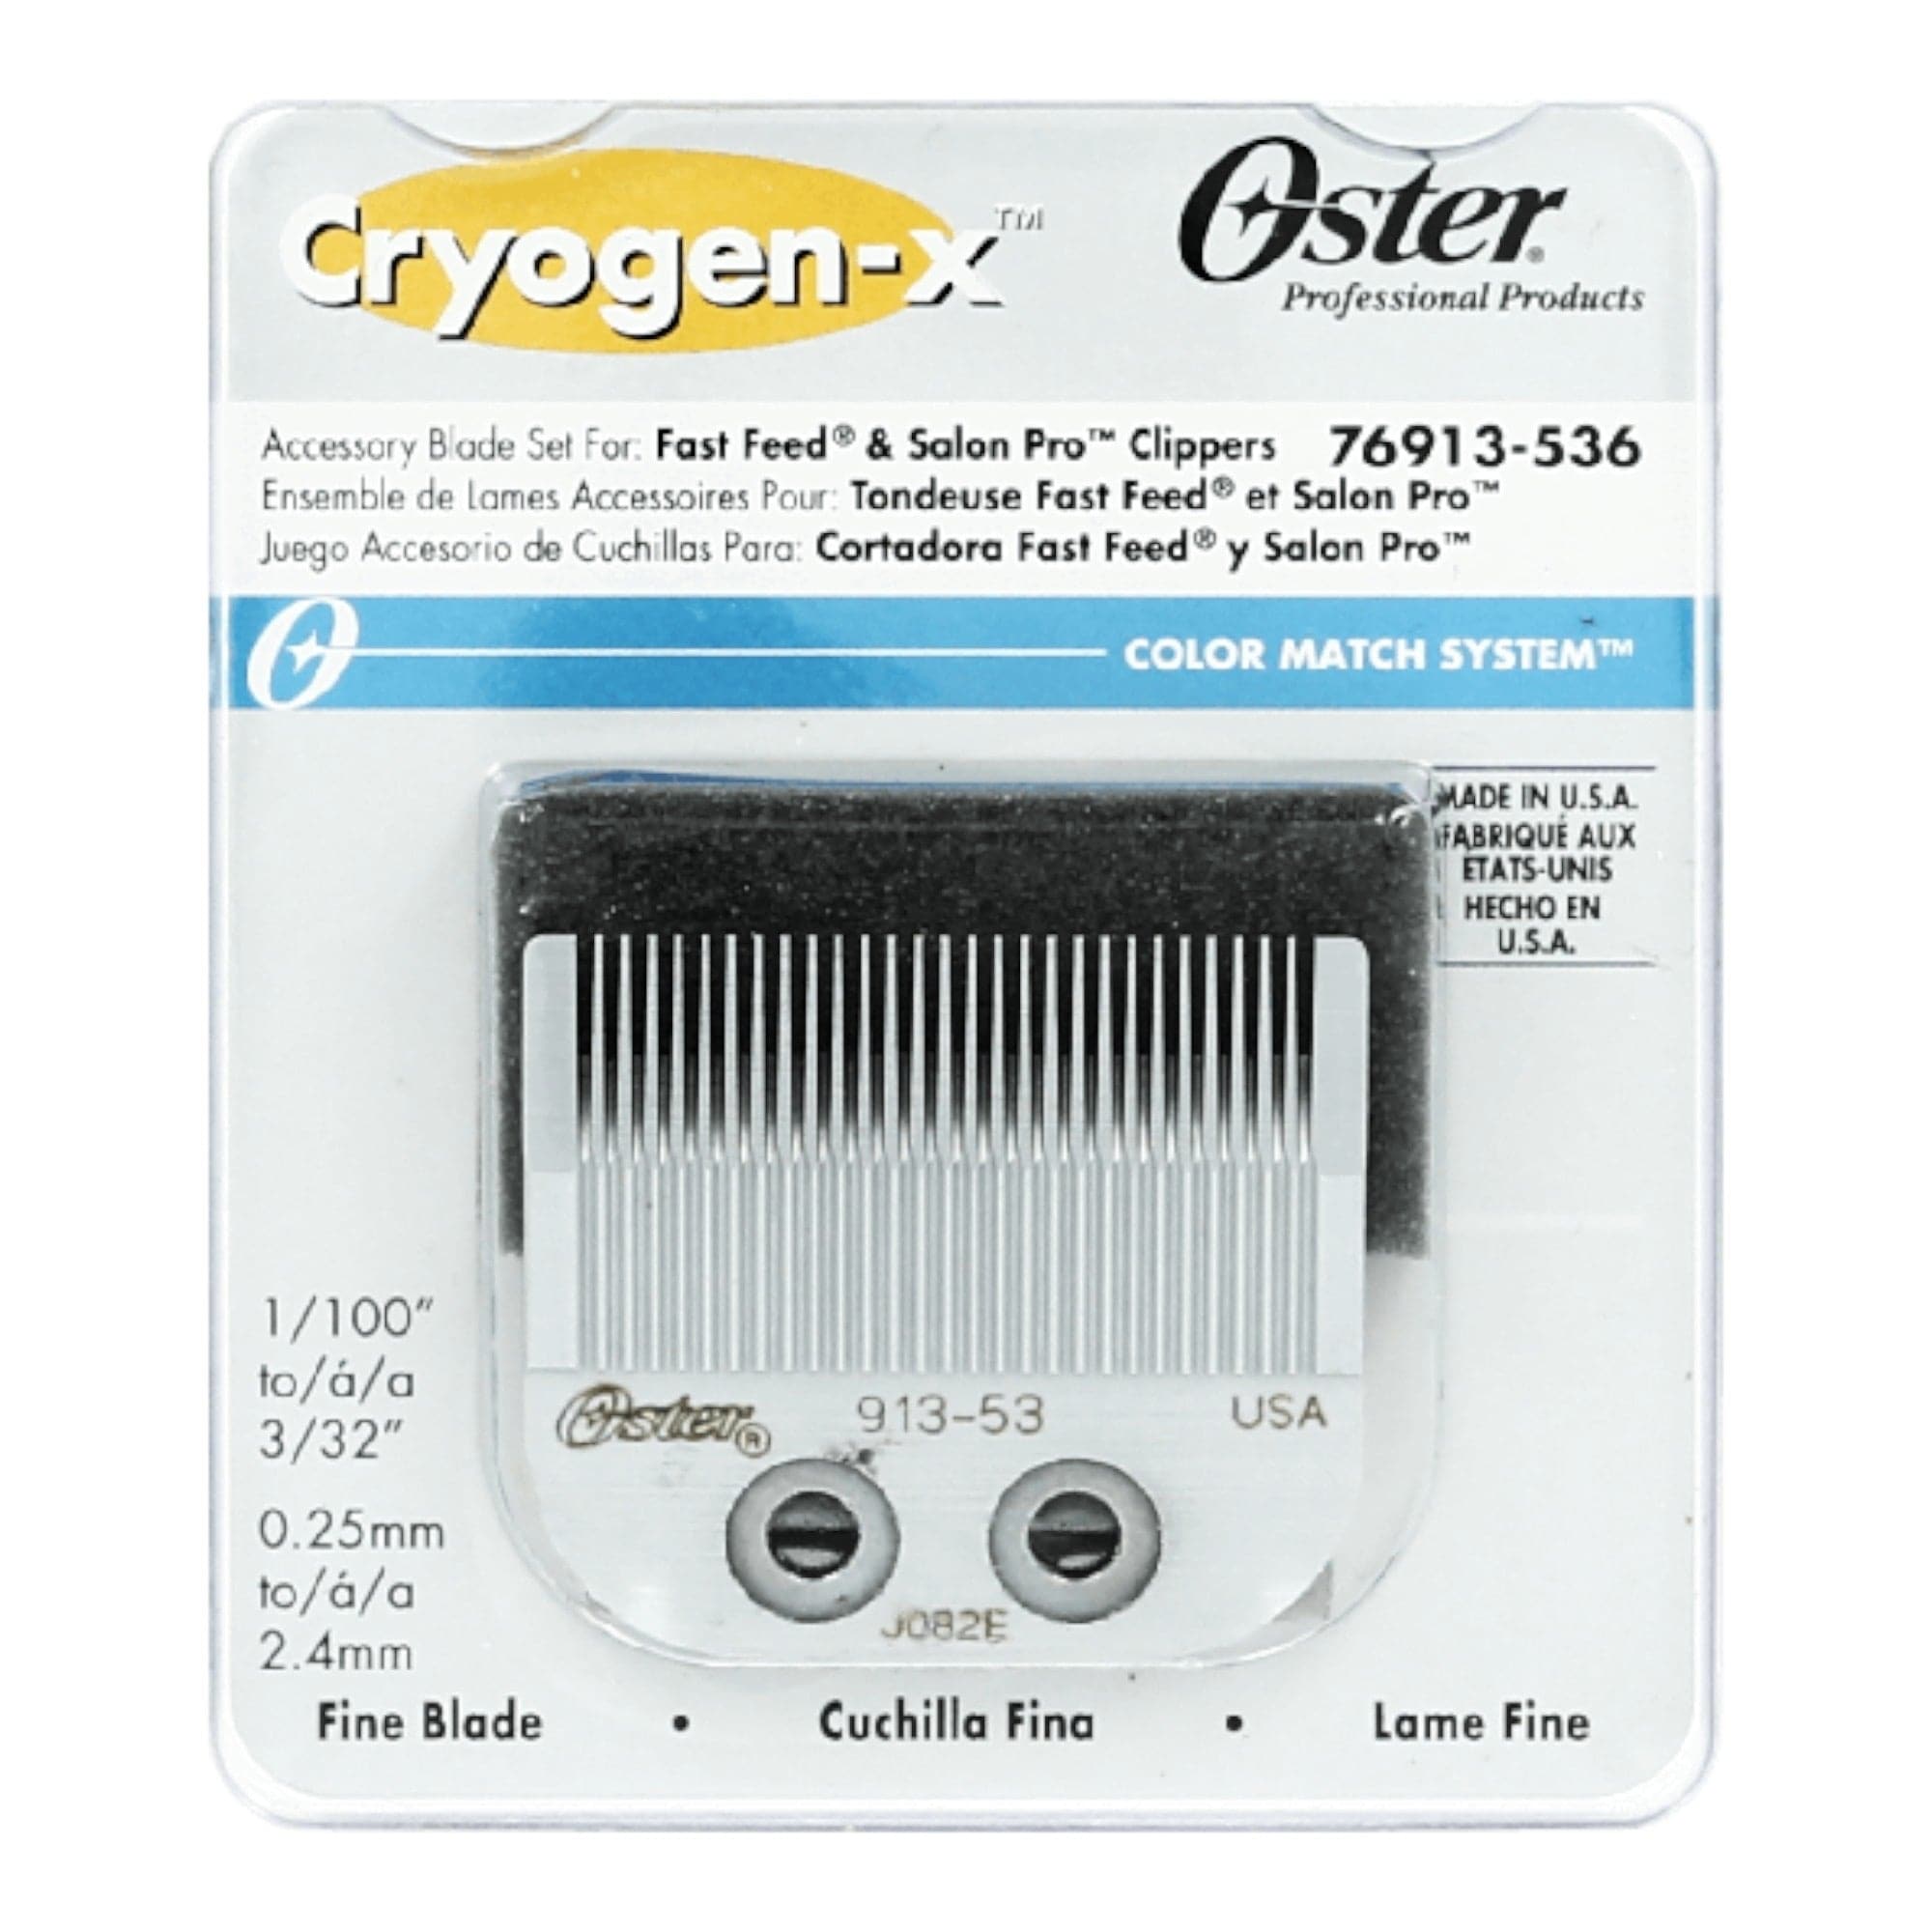 Oster - Cryogen-x Fine Blade 0.25mm - 2.4 mm 76913-536